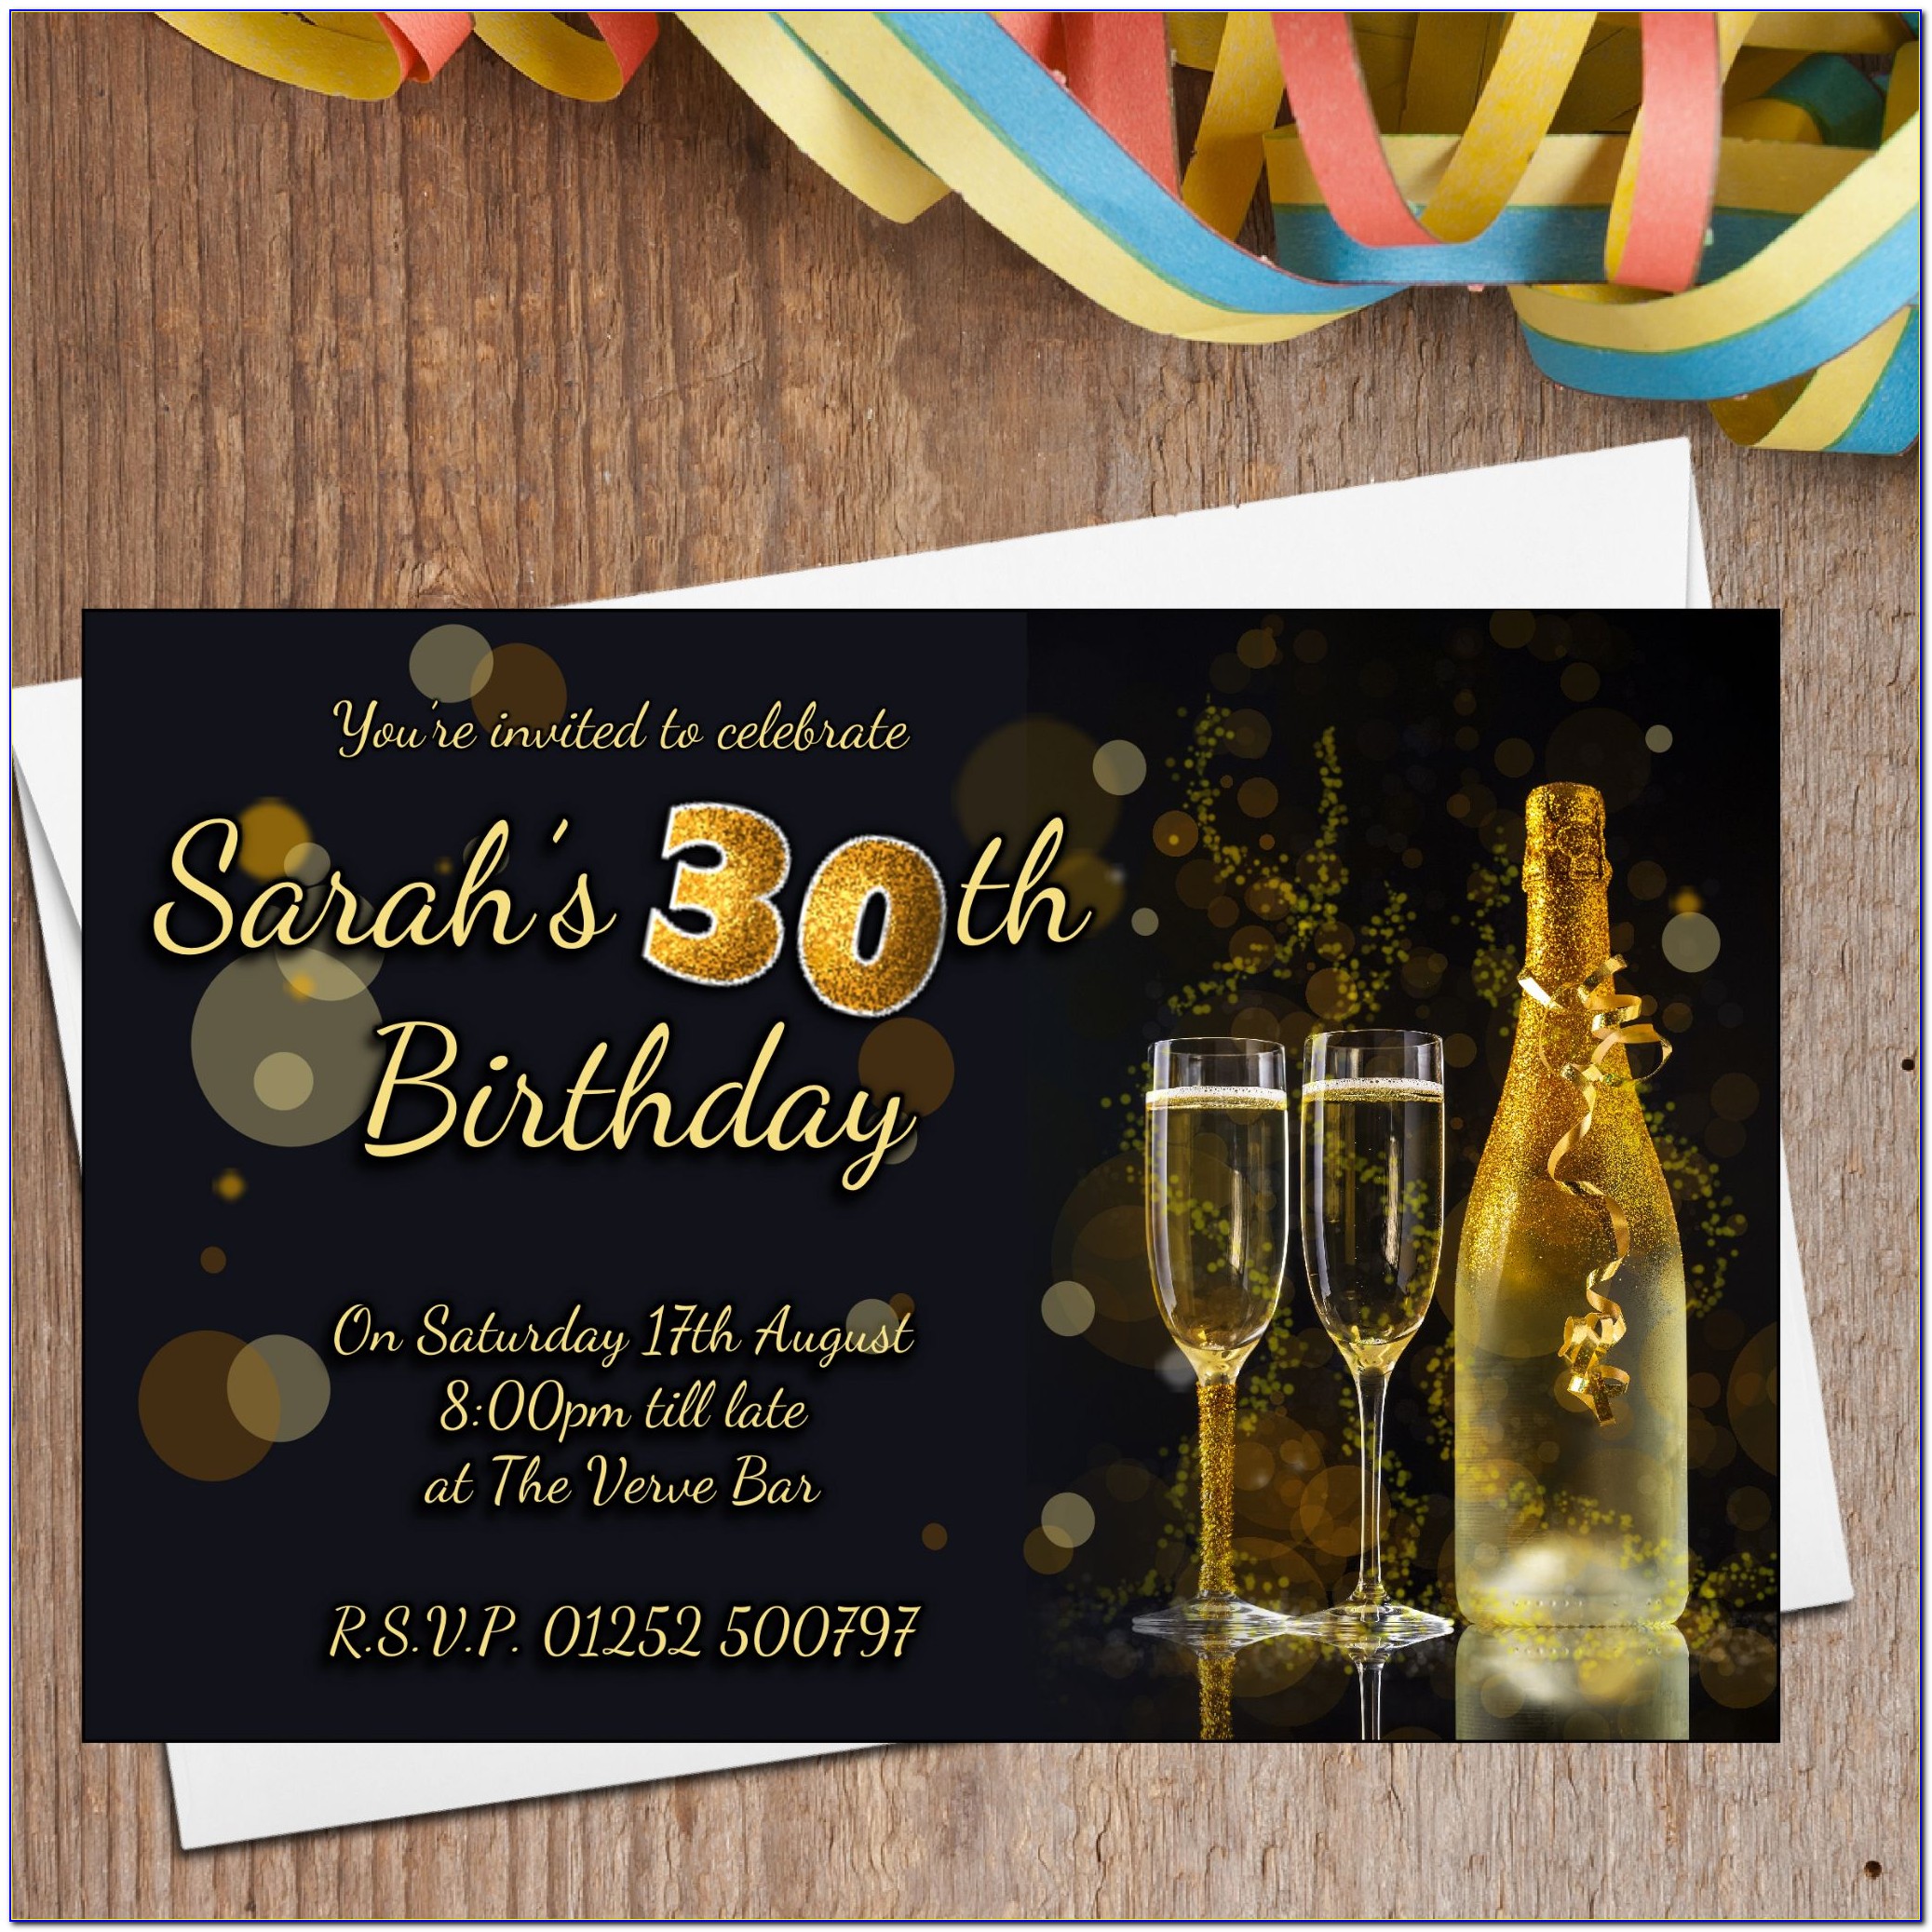 Black And Gold Birthday Invitation Card